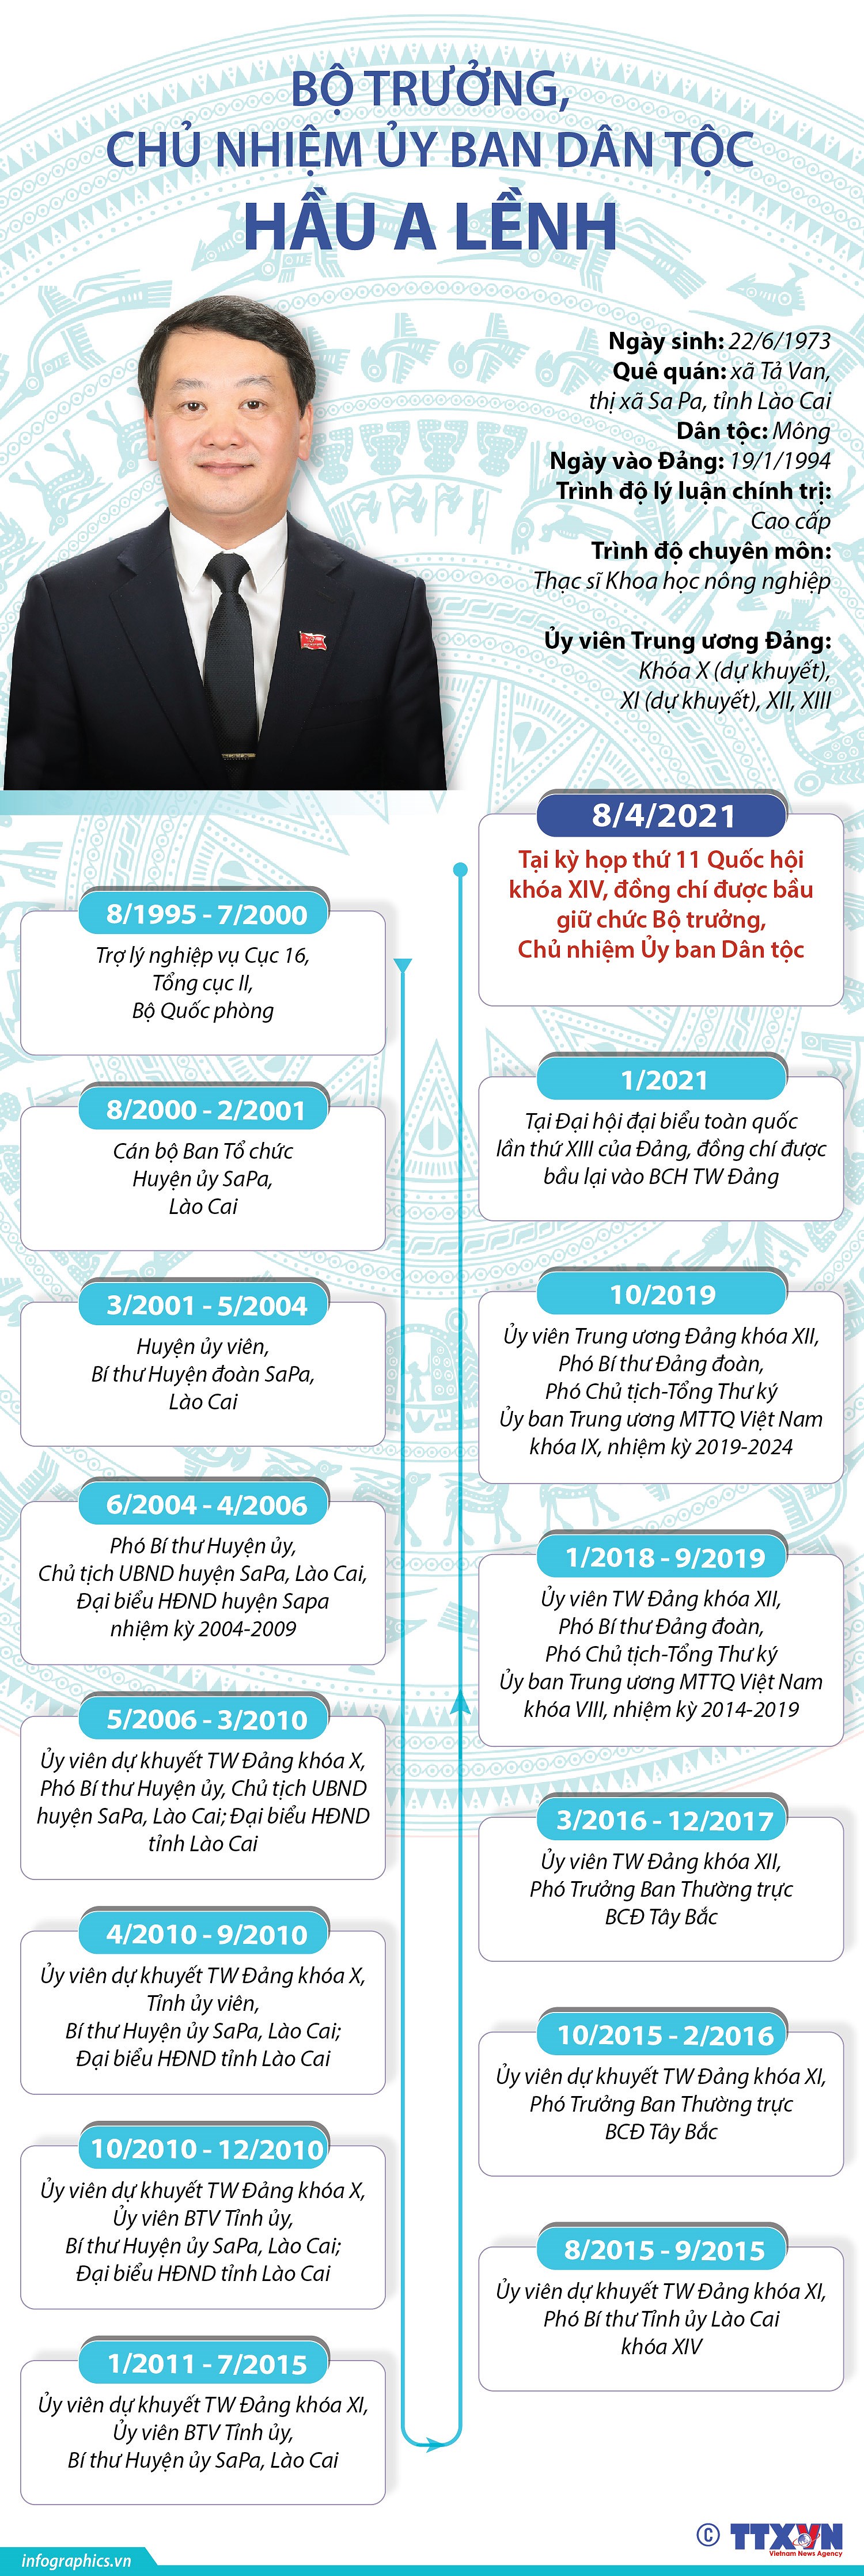 [Infographics] Bo truong, Chu nhiem Uy ban Dan toc Hau A Lenh hinh anh 1